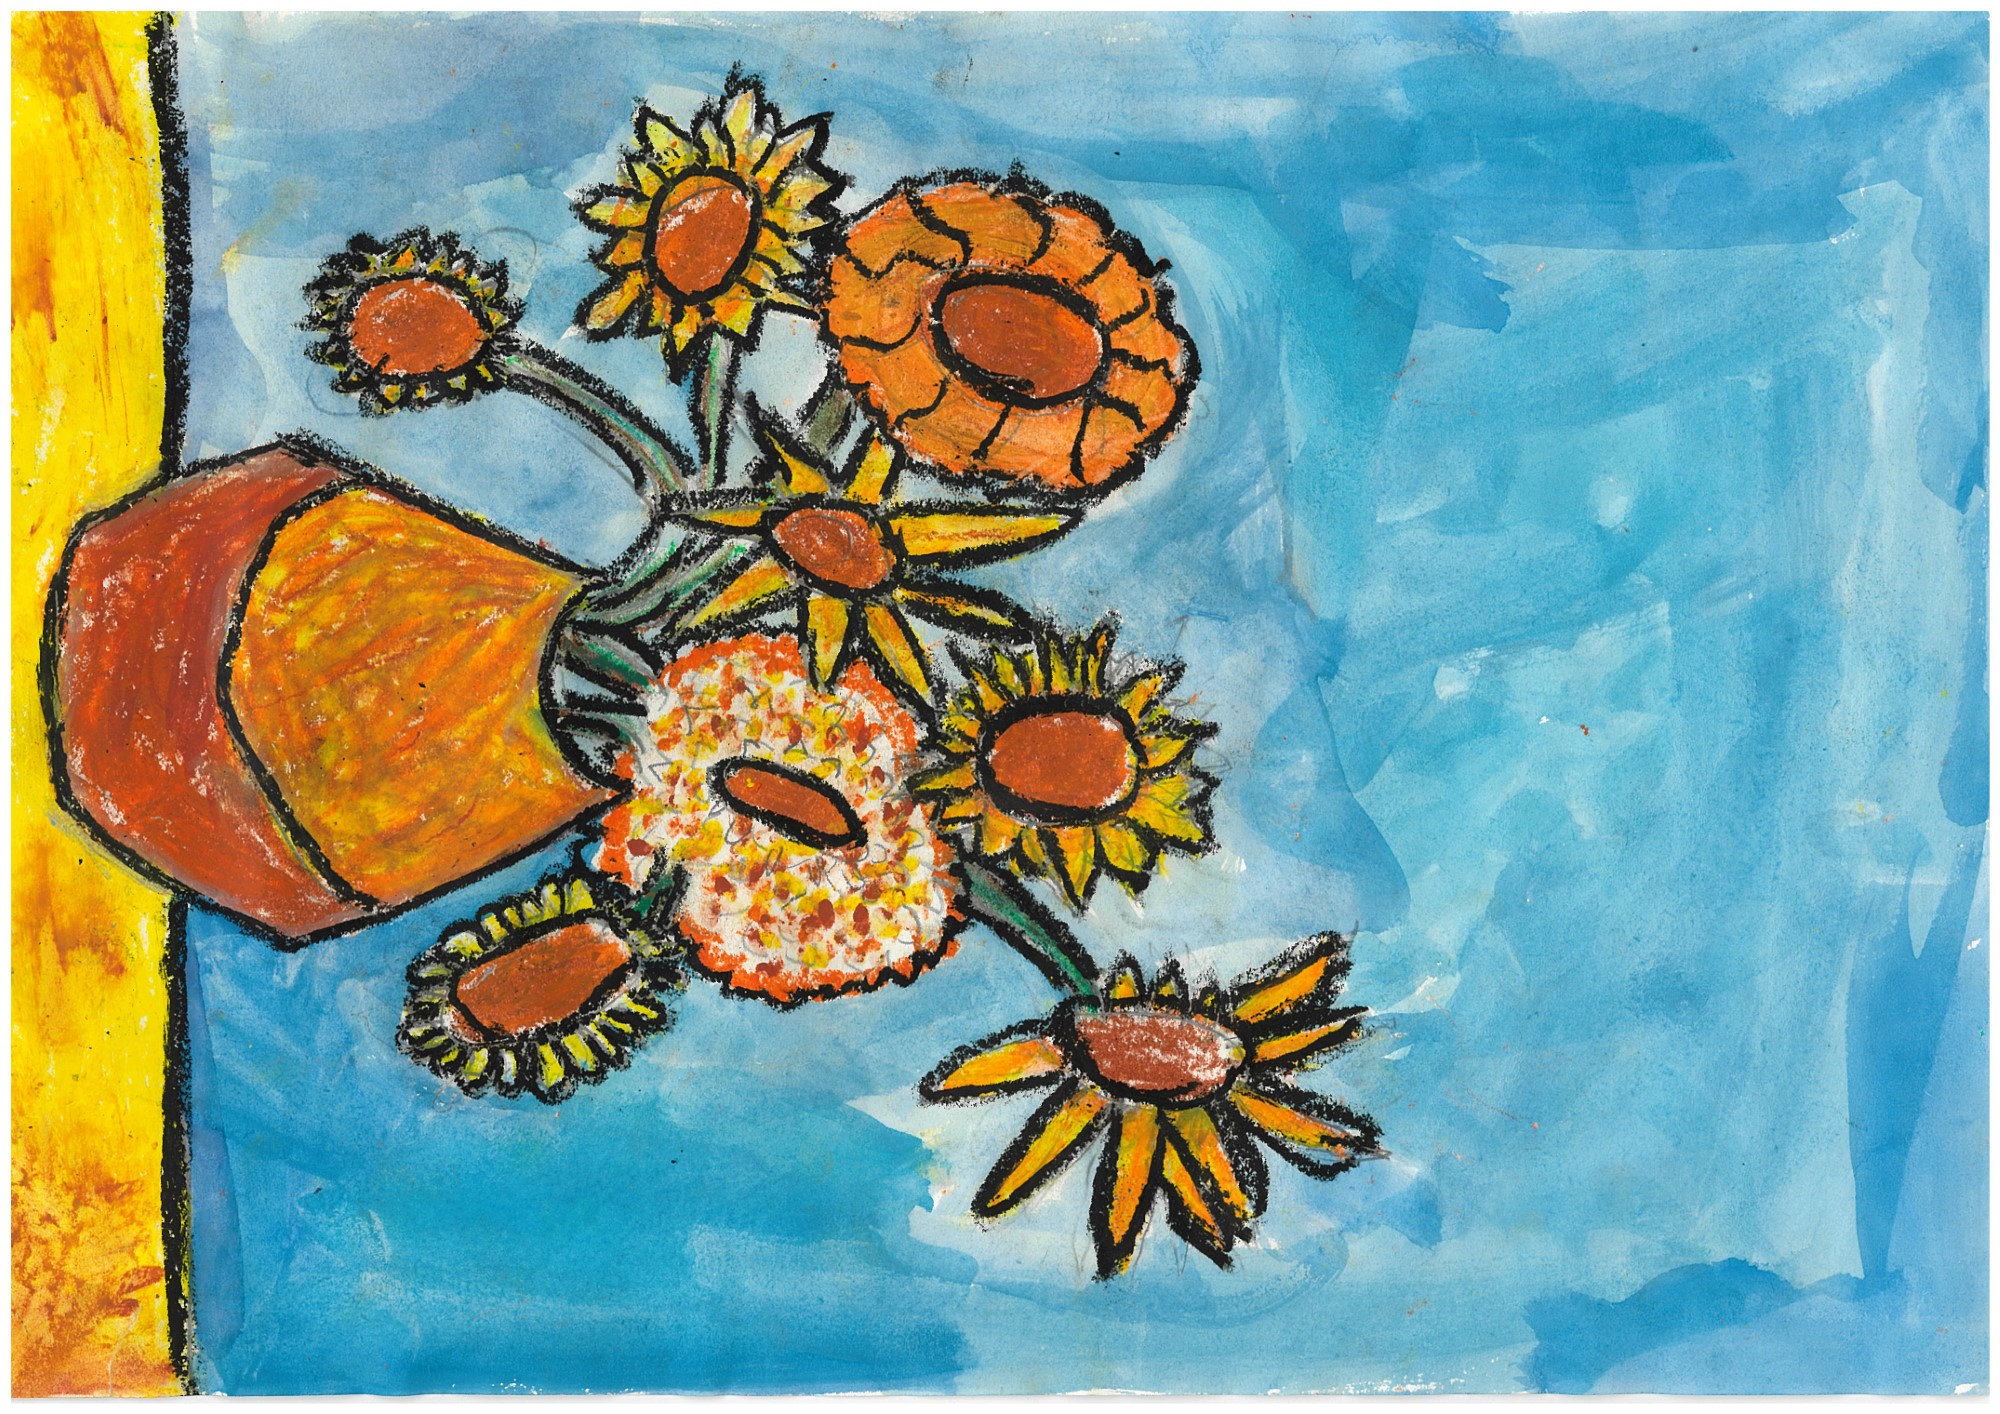 student artwork - Still life flowers